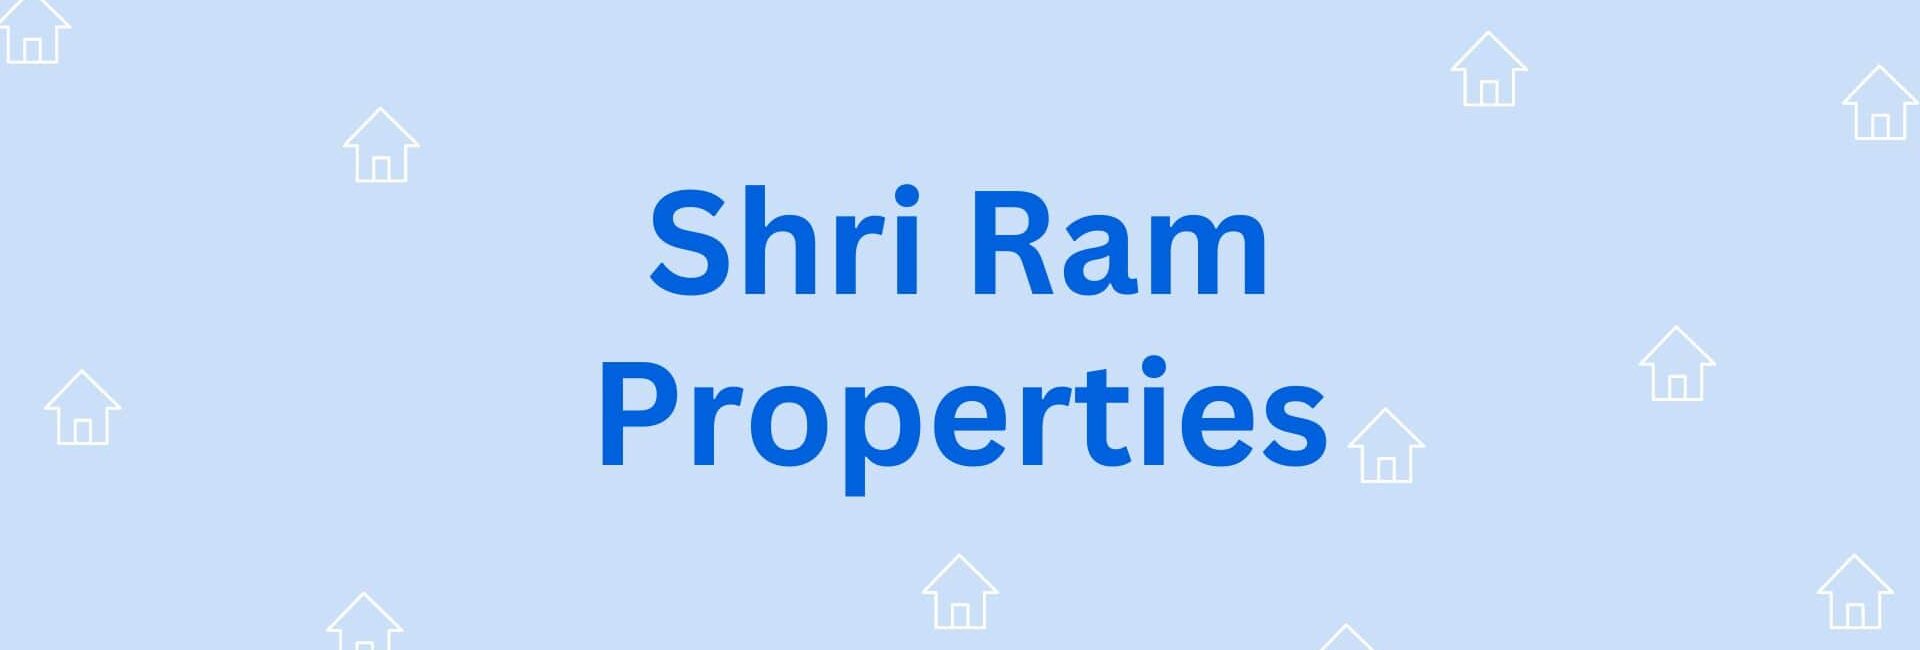 Shri Ram Properties - Property Dealer in Hisar Sector 1-4